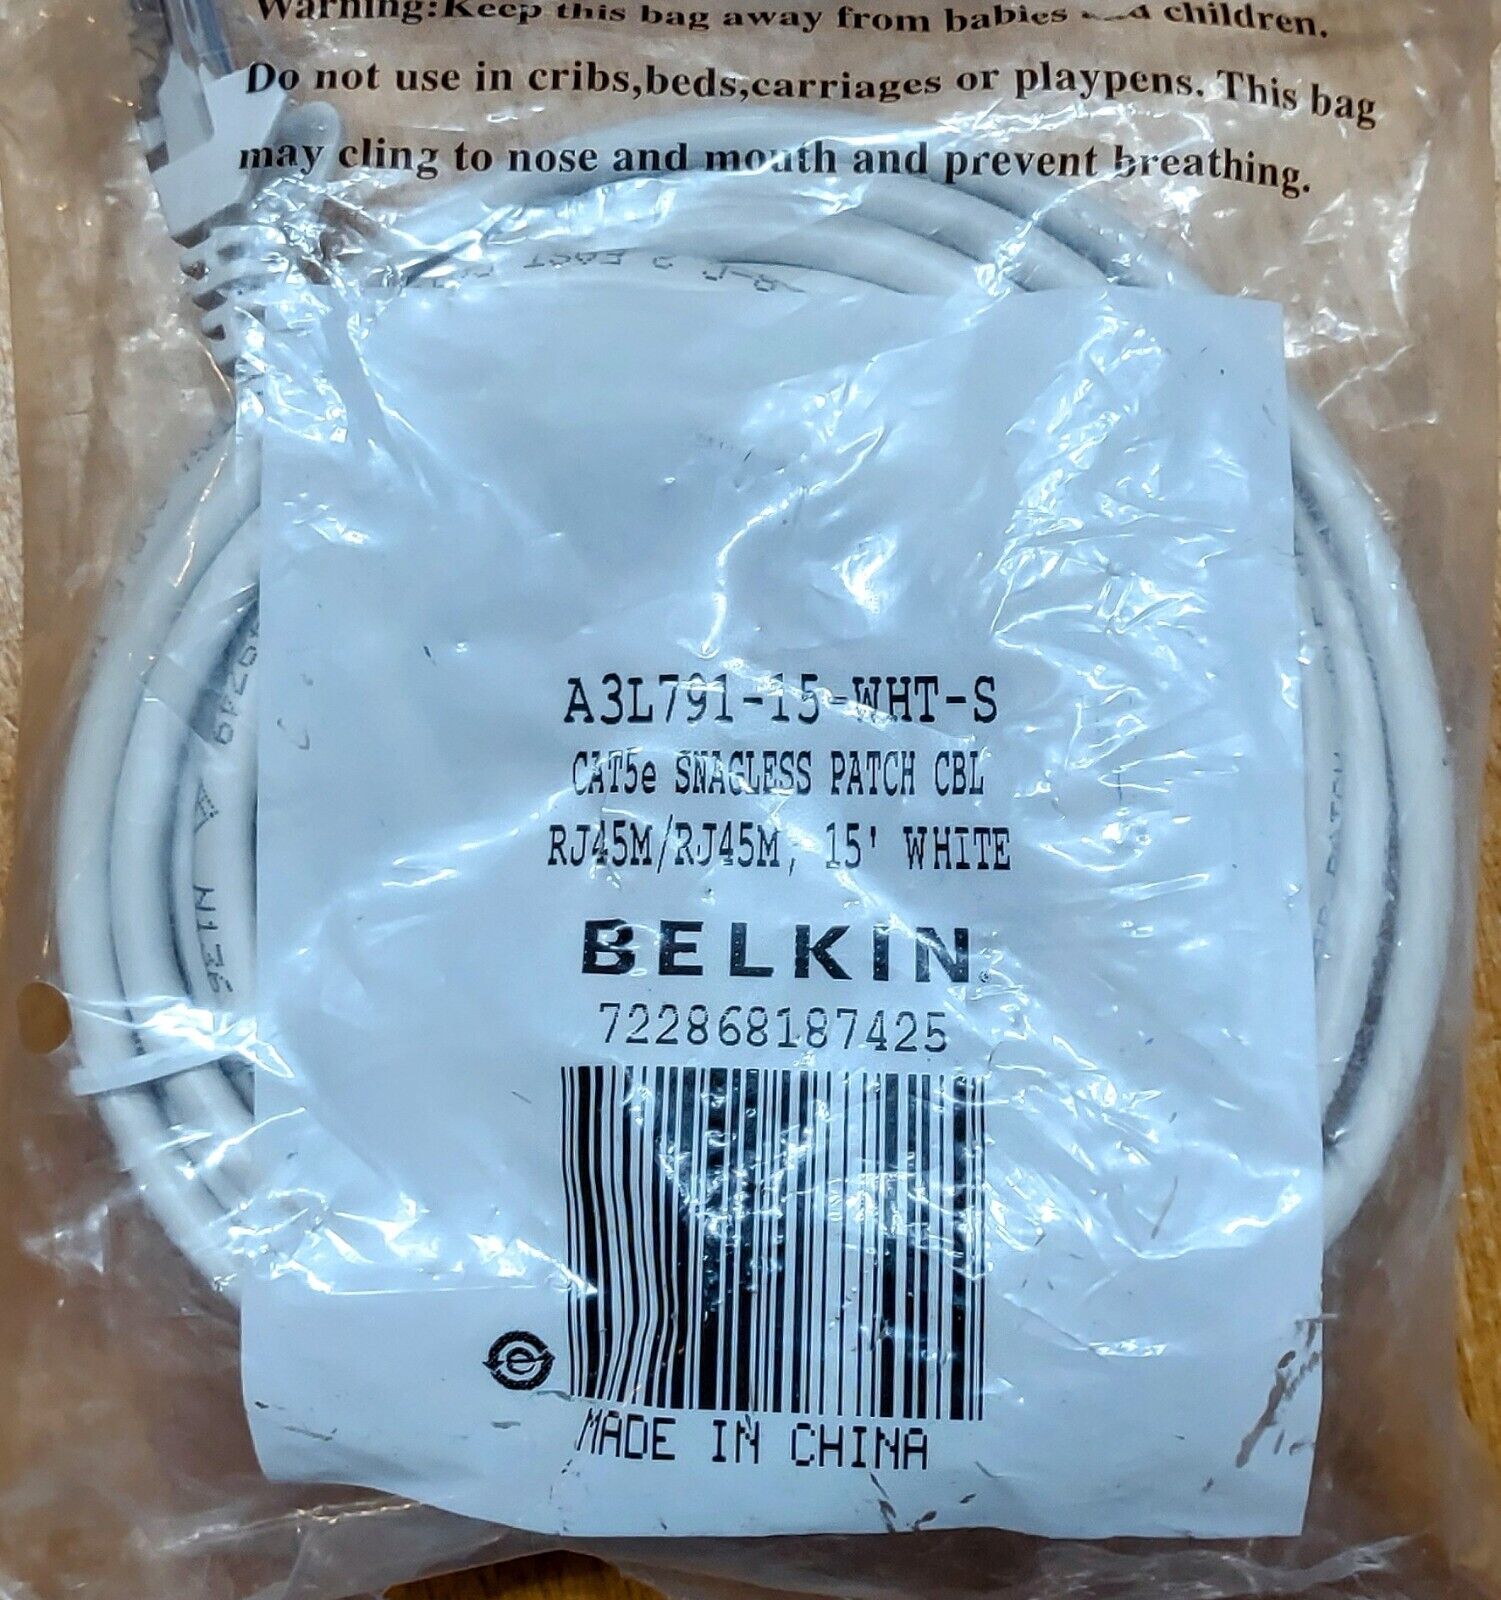 Belkin A3L791-15-Wht-s Cat5e Snagless Patch Cbl Rj45m/Rj45m 25' White